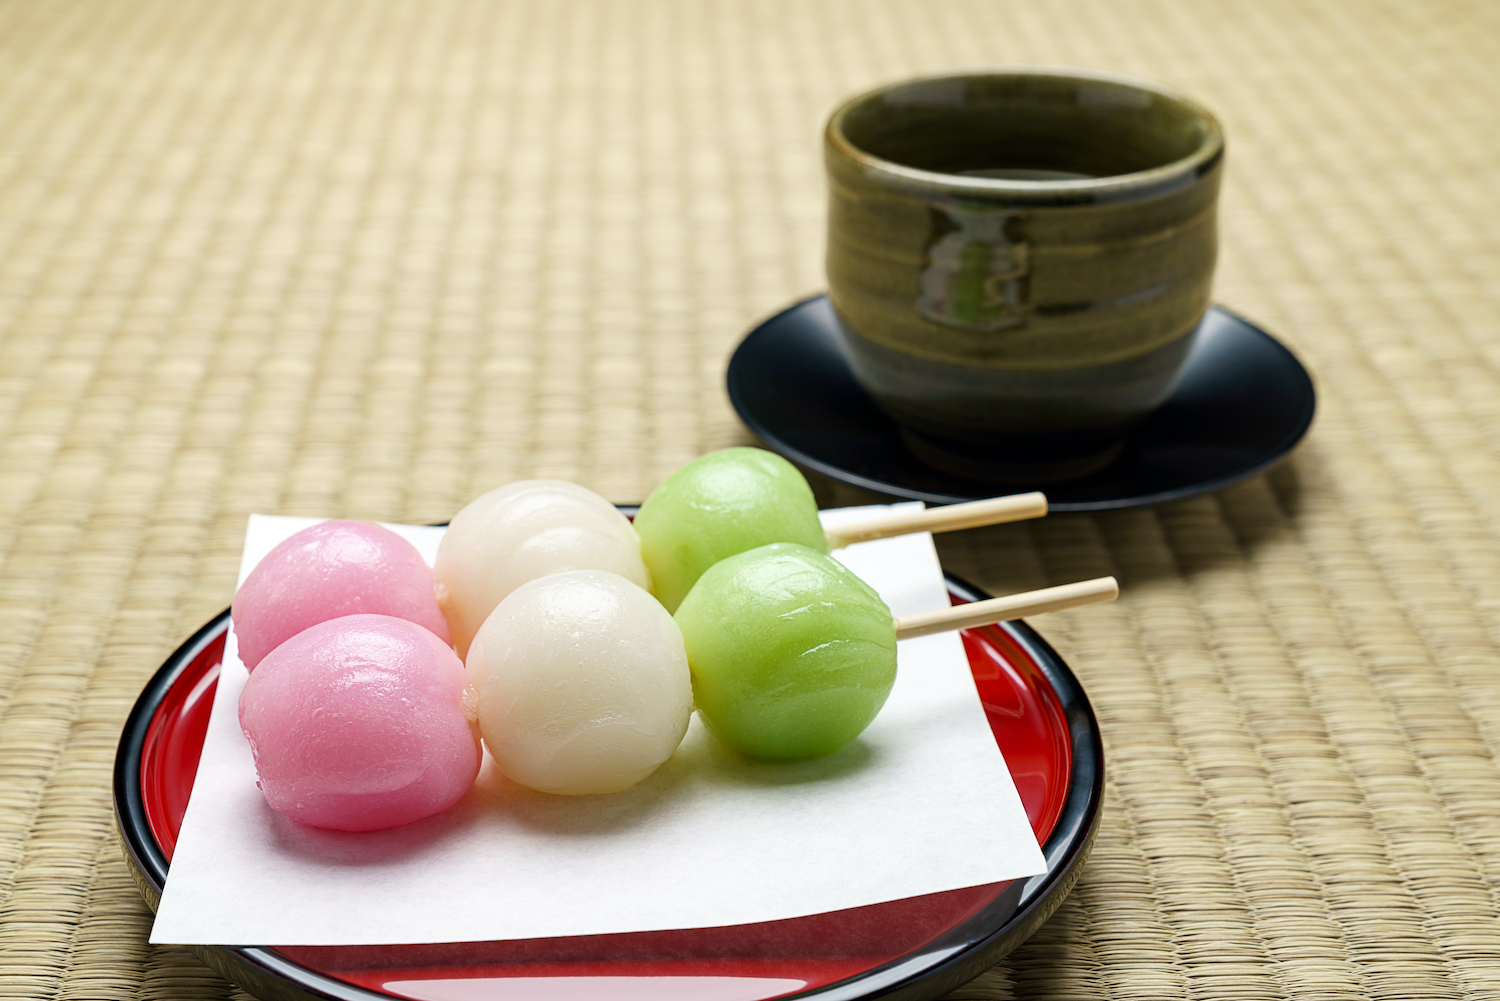 Japanese three colored dumplings 'Sanshoku Dango'